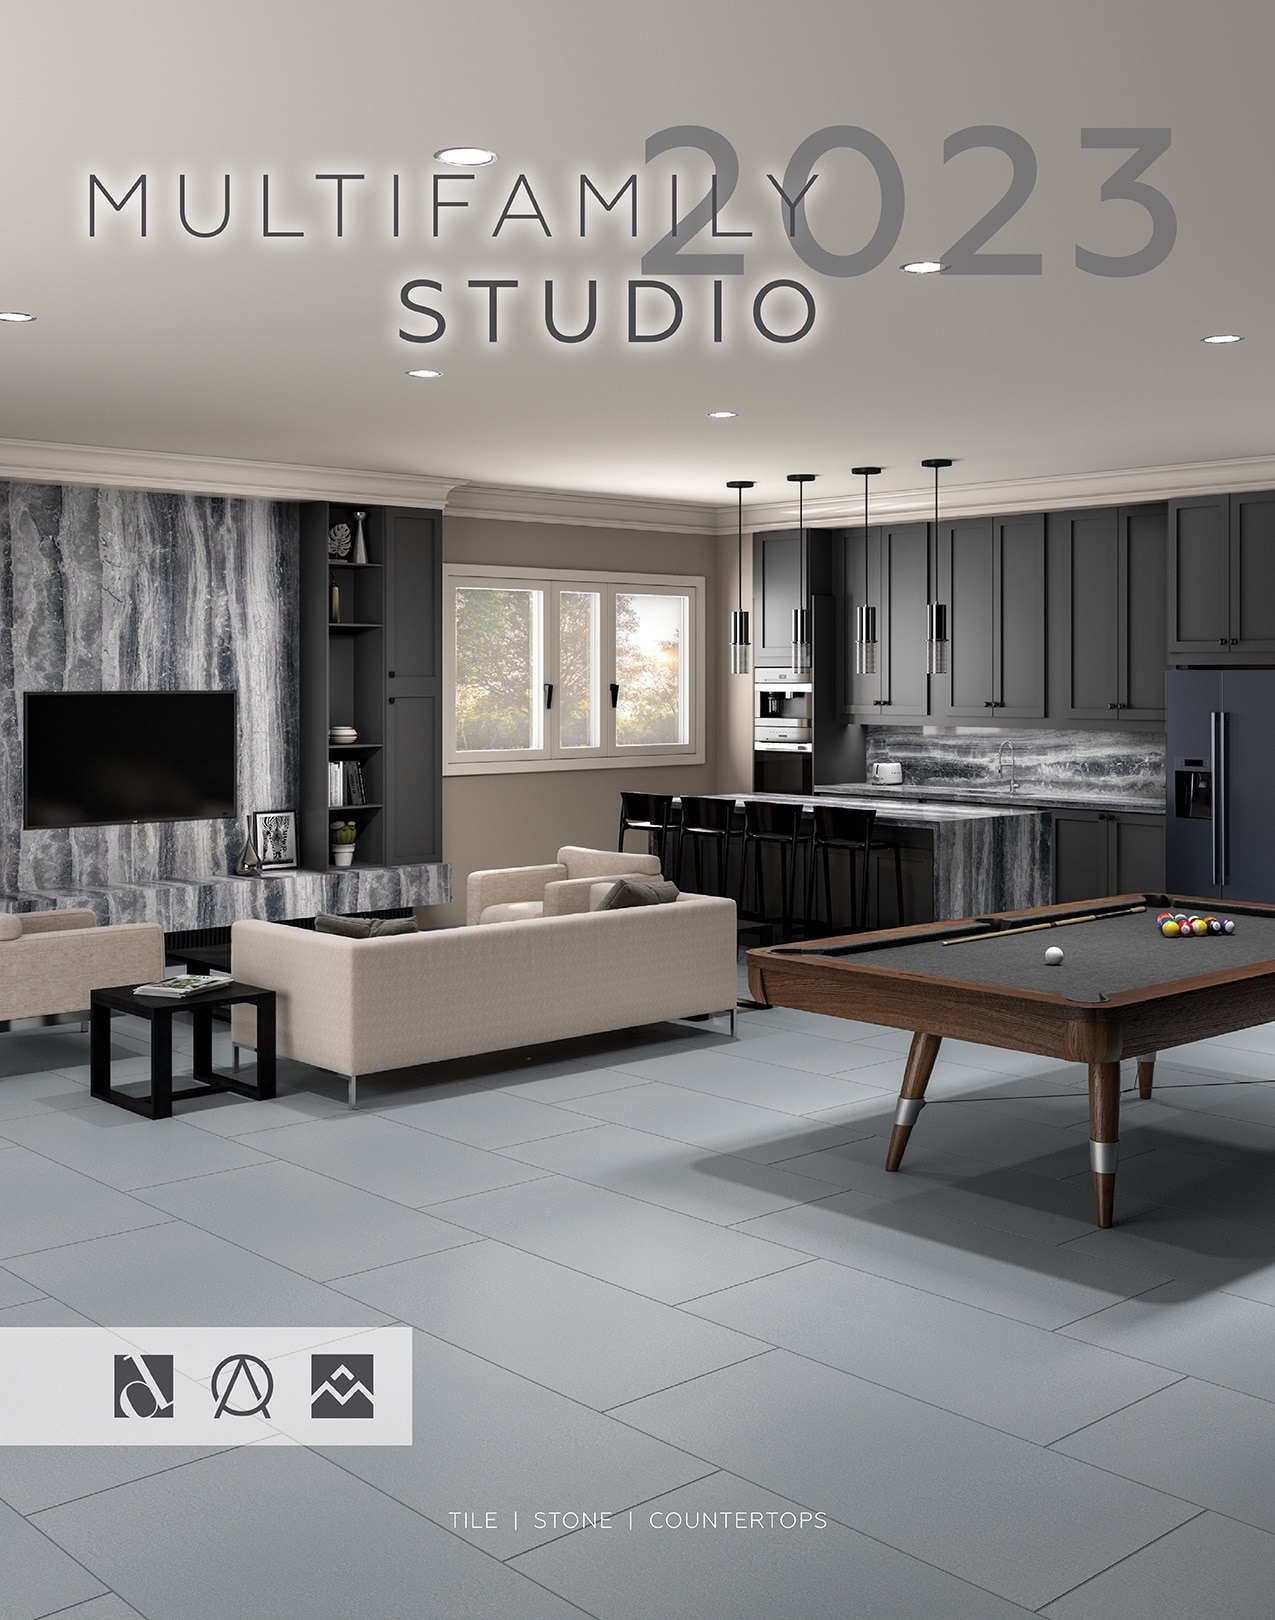 Builder Studio 2023 - Multifamily Studio Tile, Stone, Countertops